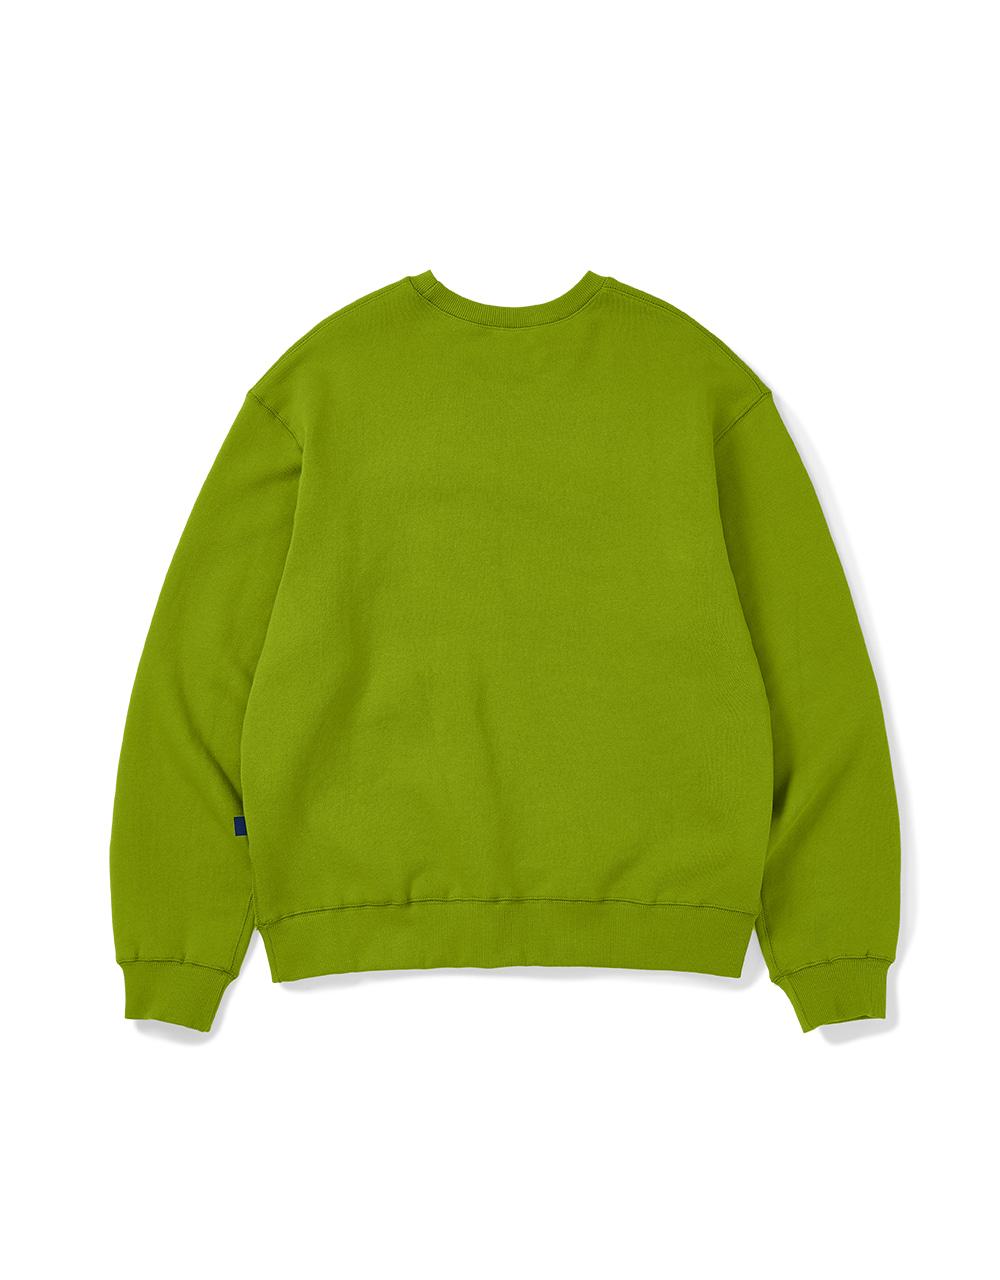 Áo tay dài Mmlg Gardening Sweat - Áo Hoodie Sweater cho nam, nữ, unisex